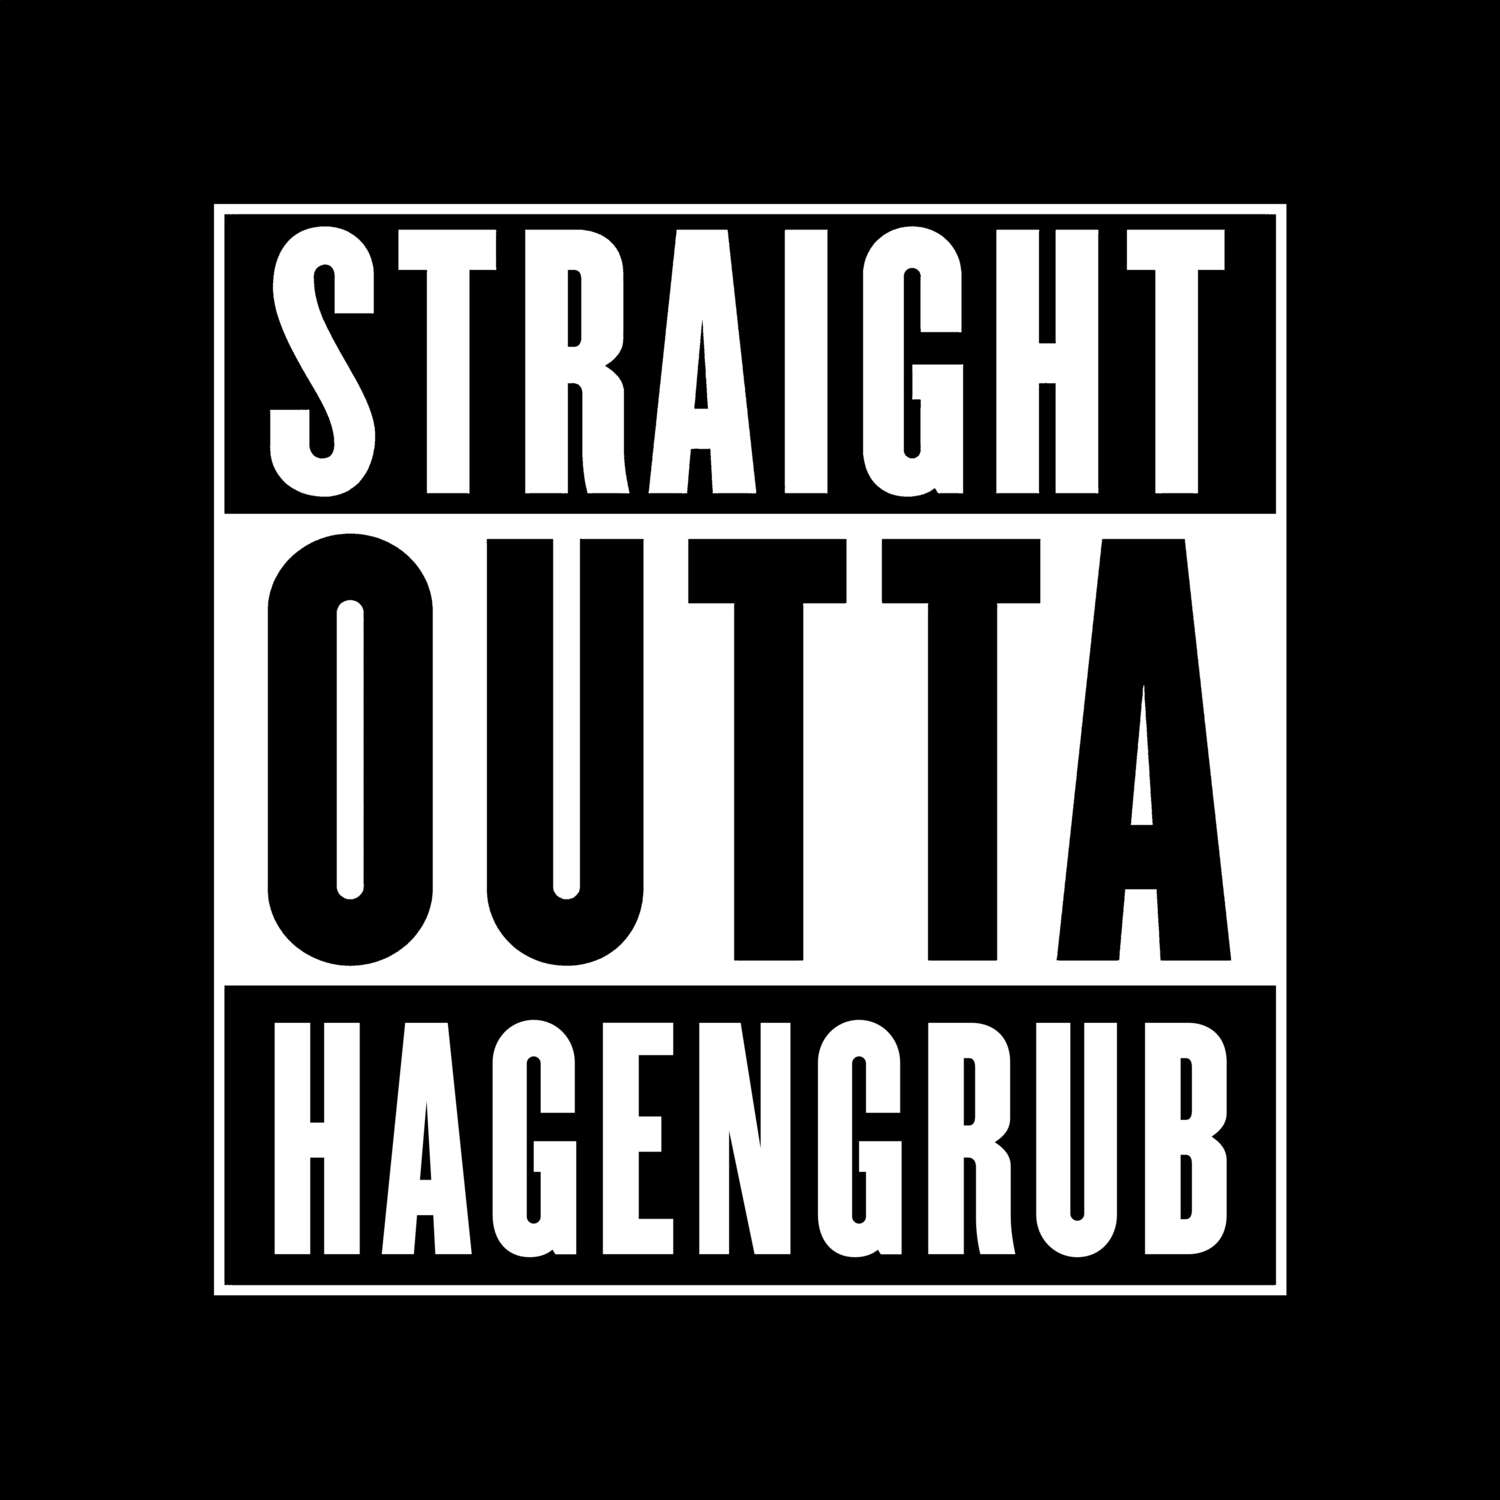 Hagengrub T-Shirt »Straight Outta«